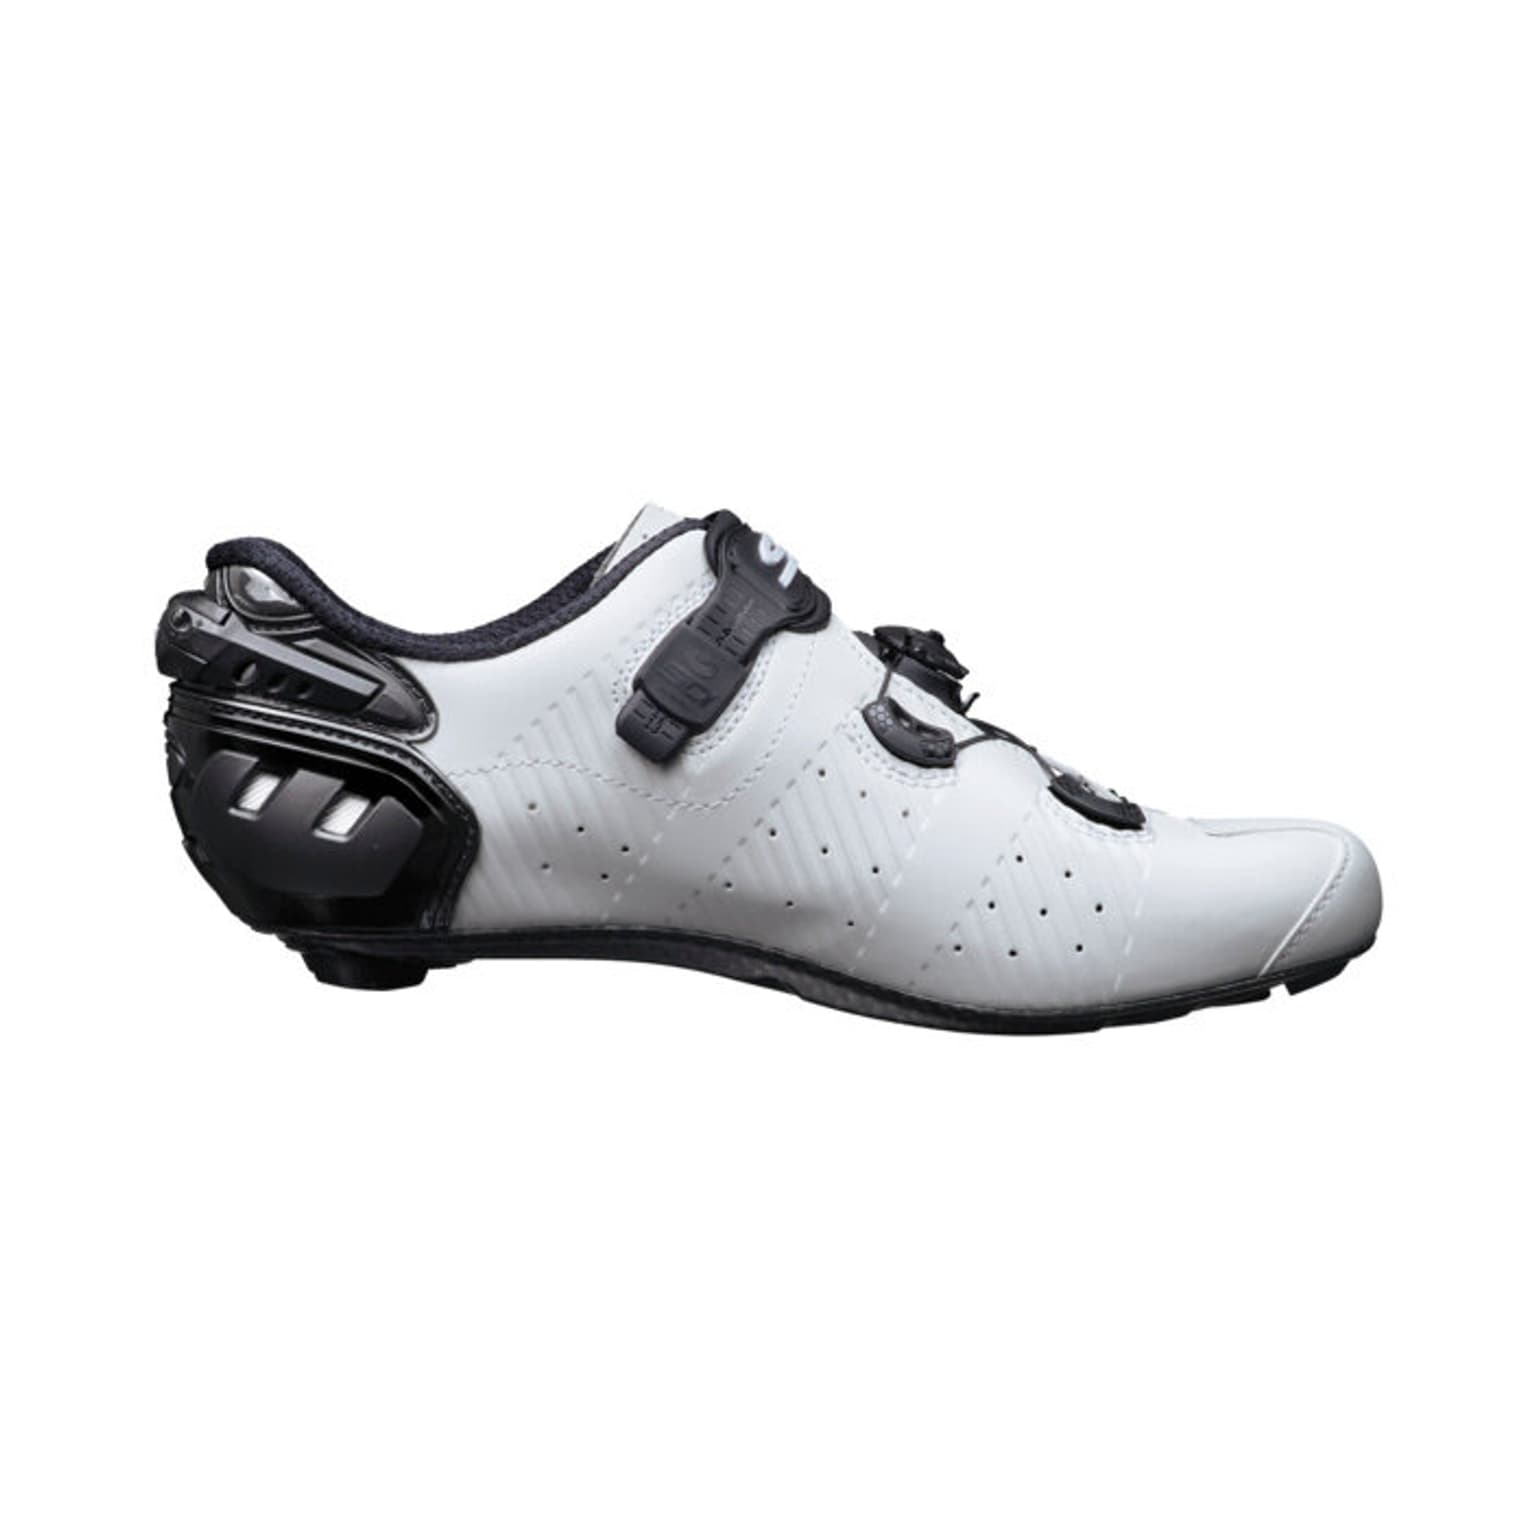 SIDI SIDI RR Wire 2S Carbon Chaussures de cyclisme blanc 2